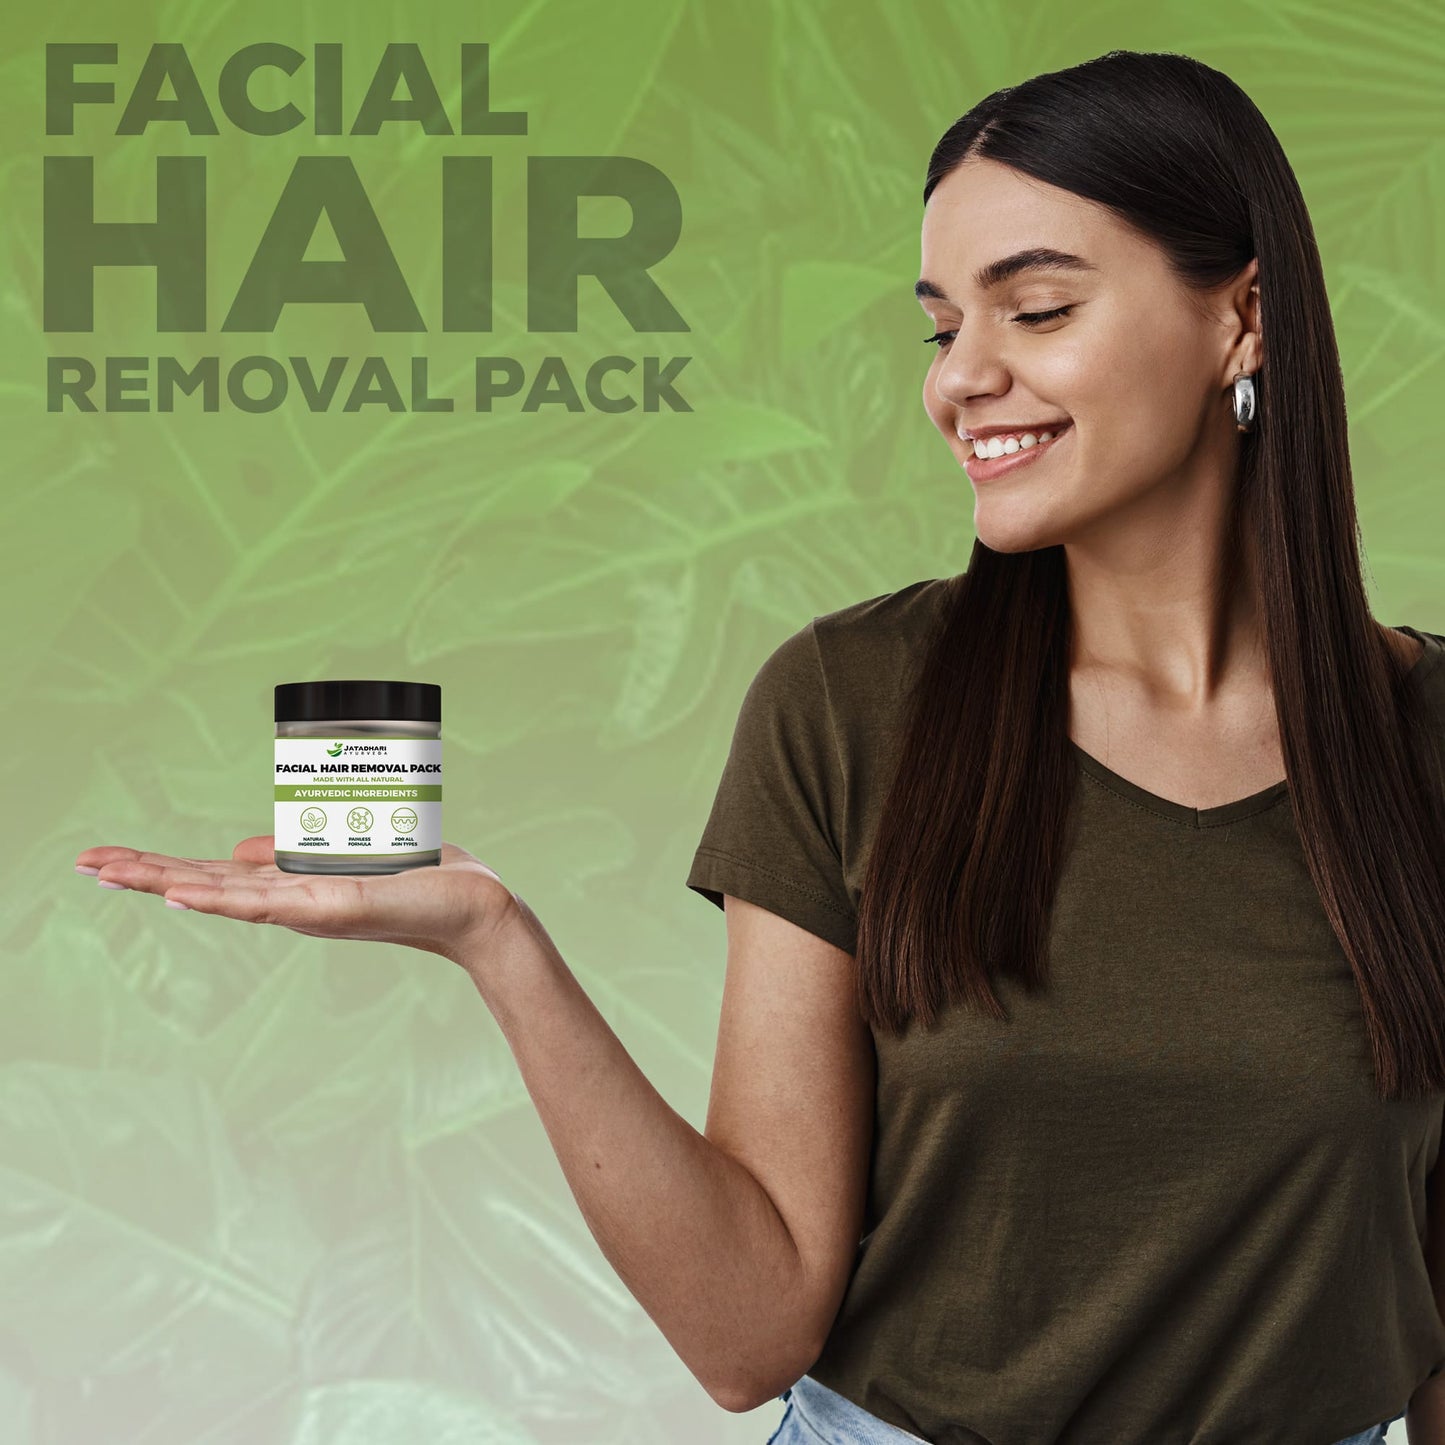 Facial Hair Removal Pack